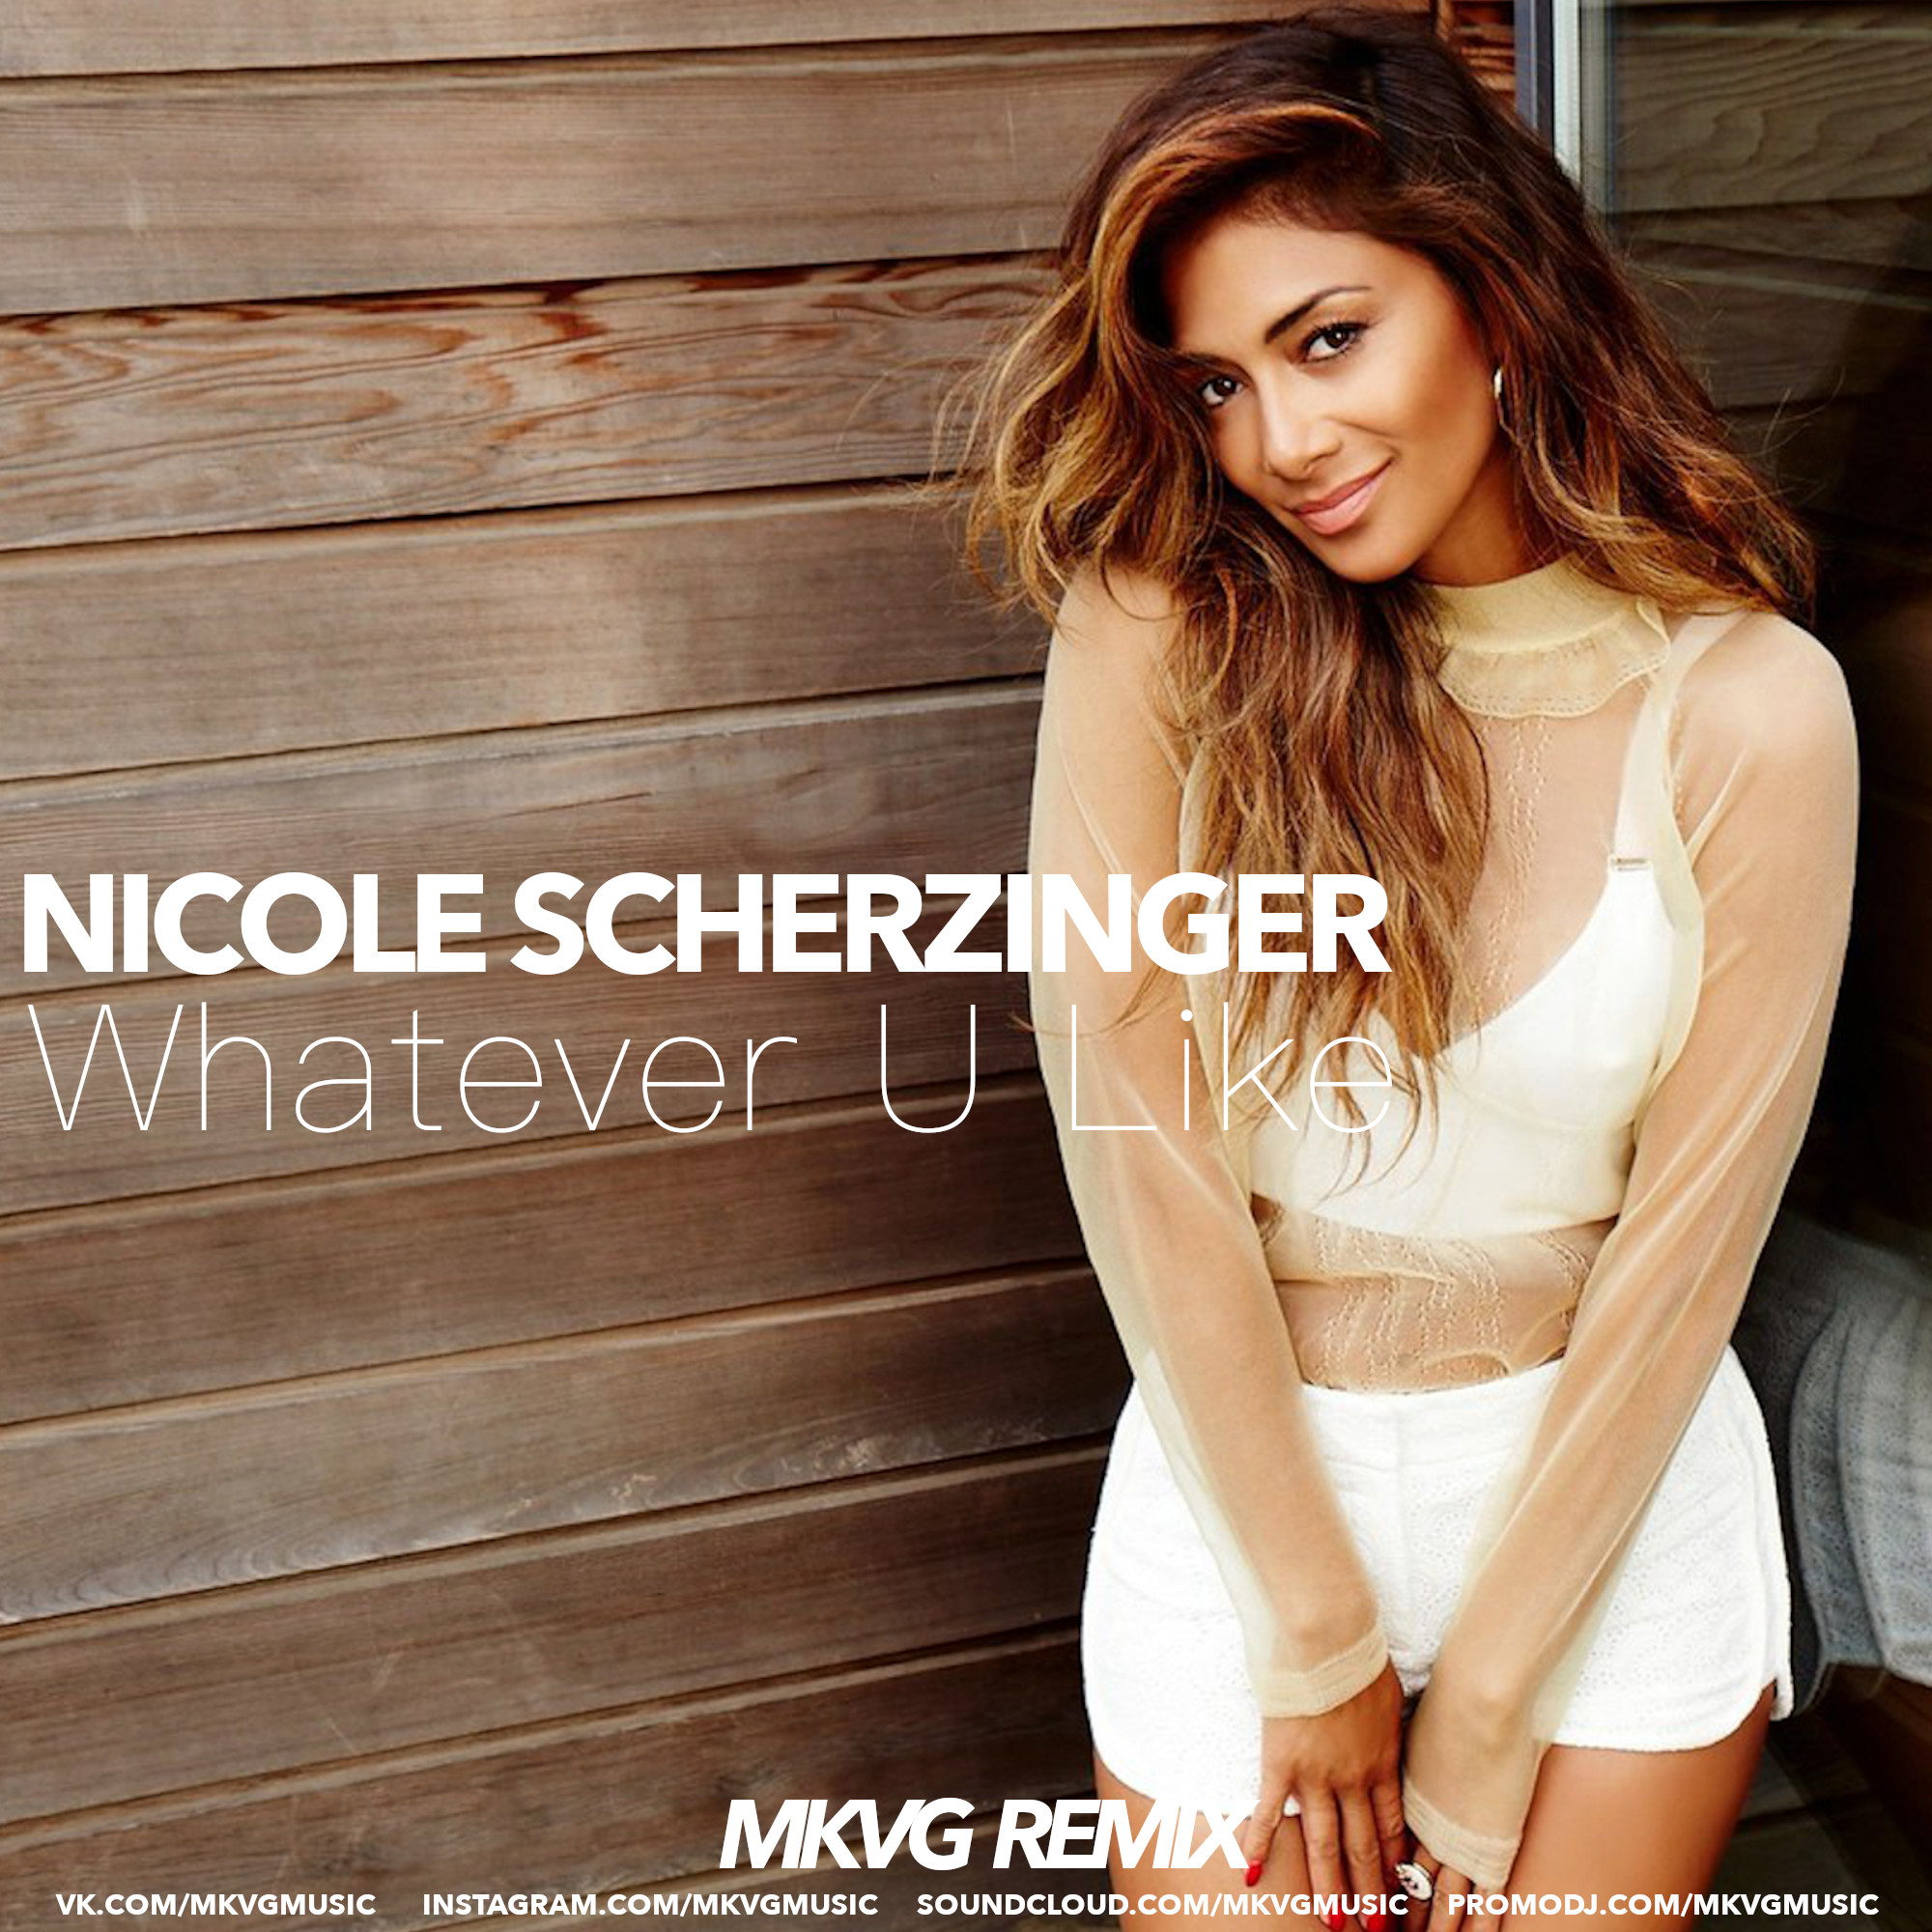 Whatever u like. Nicole Scherzinger улыбка. Nicole Scherzinger whatever. Nicole Scherzinger whatever u like.